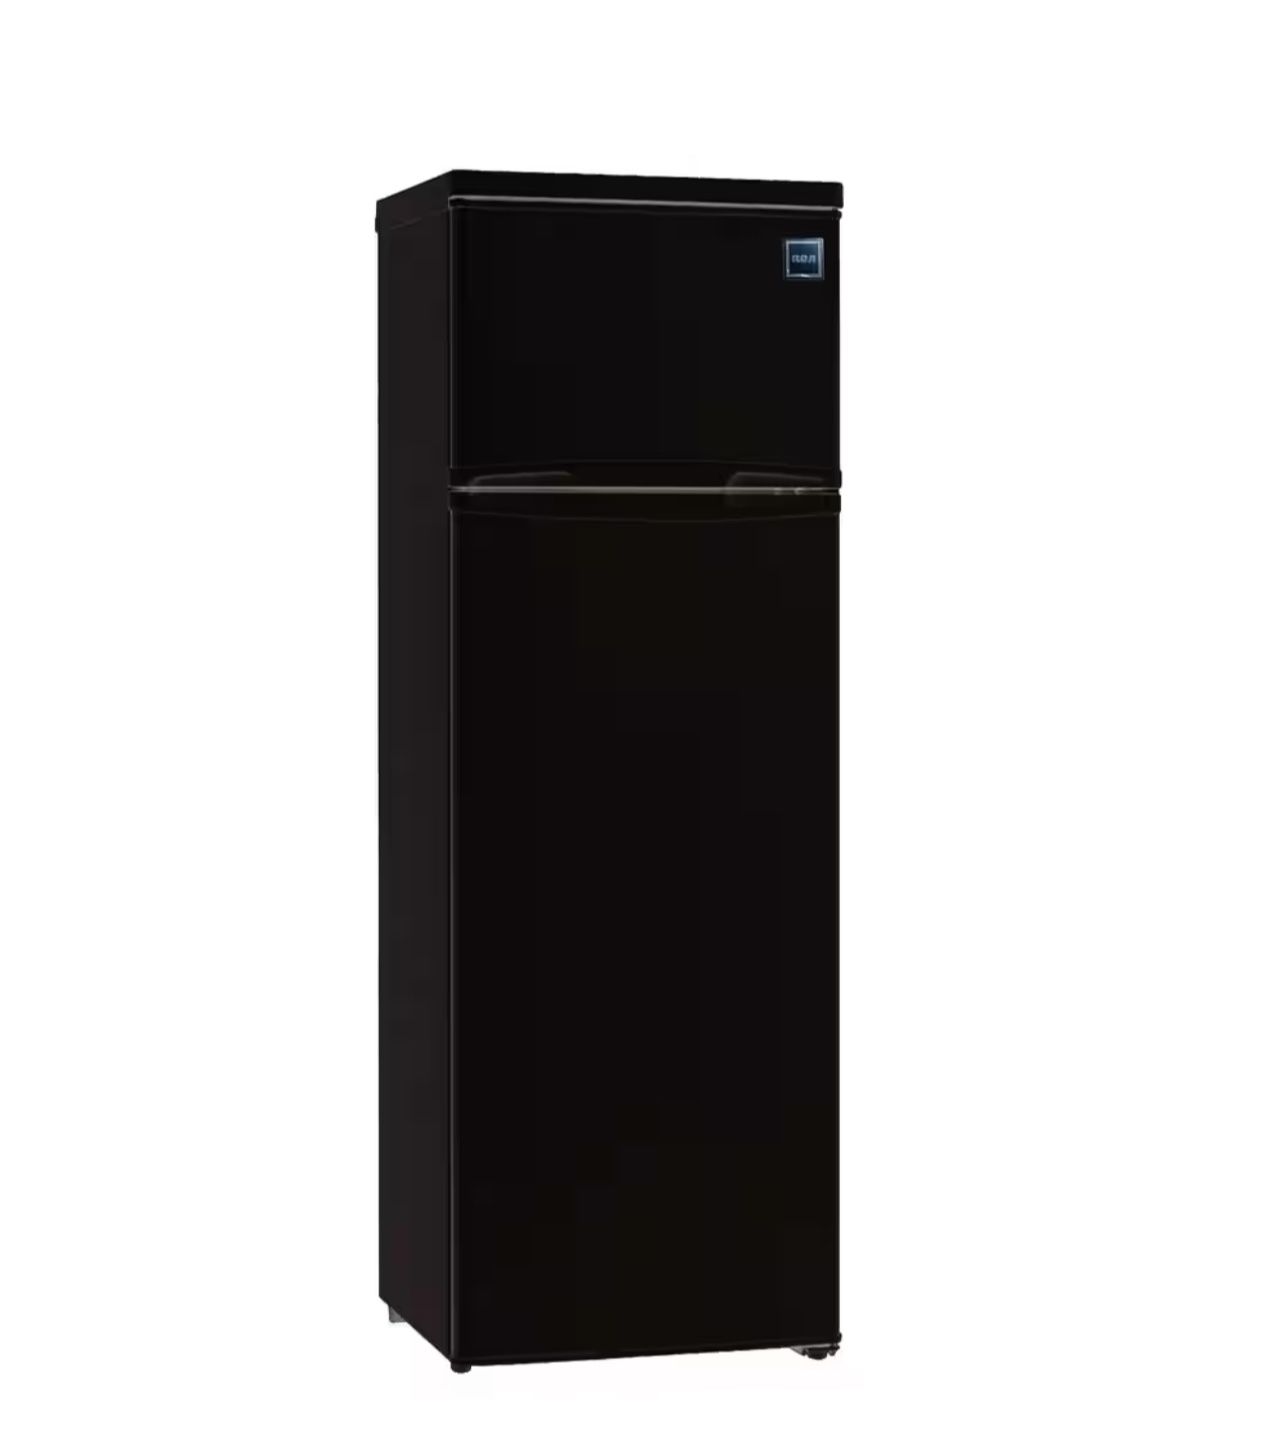 10 cu. ft. Top Freezer Refrigerator in Black